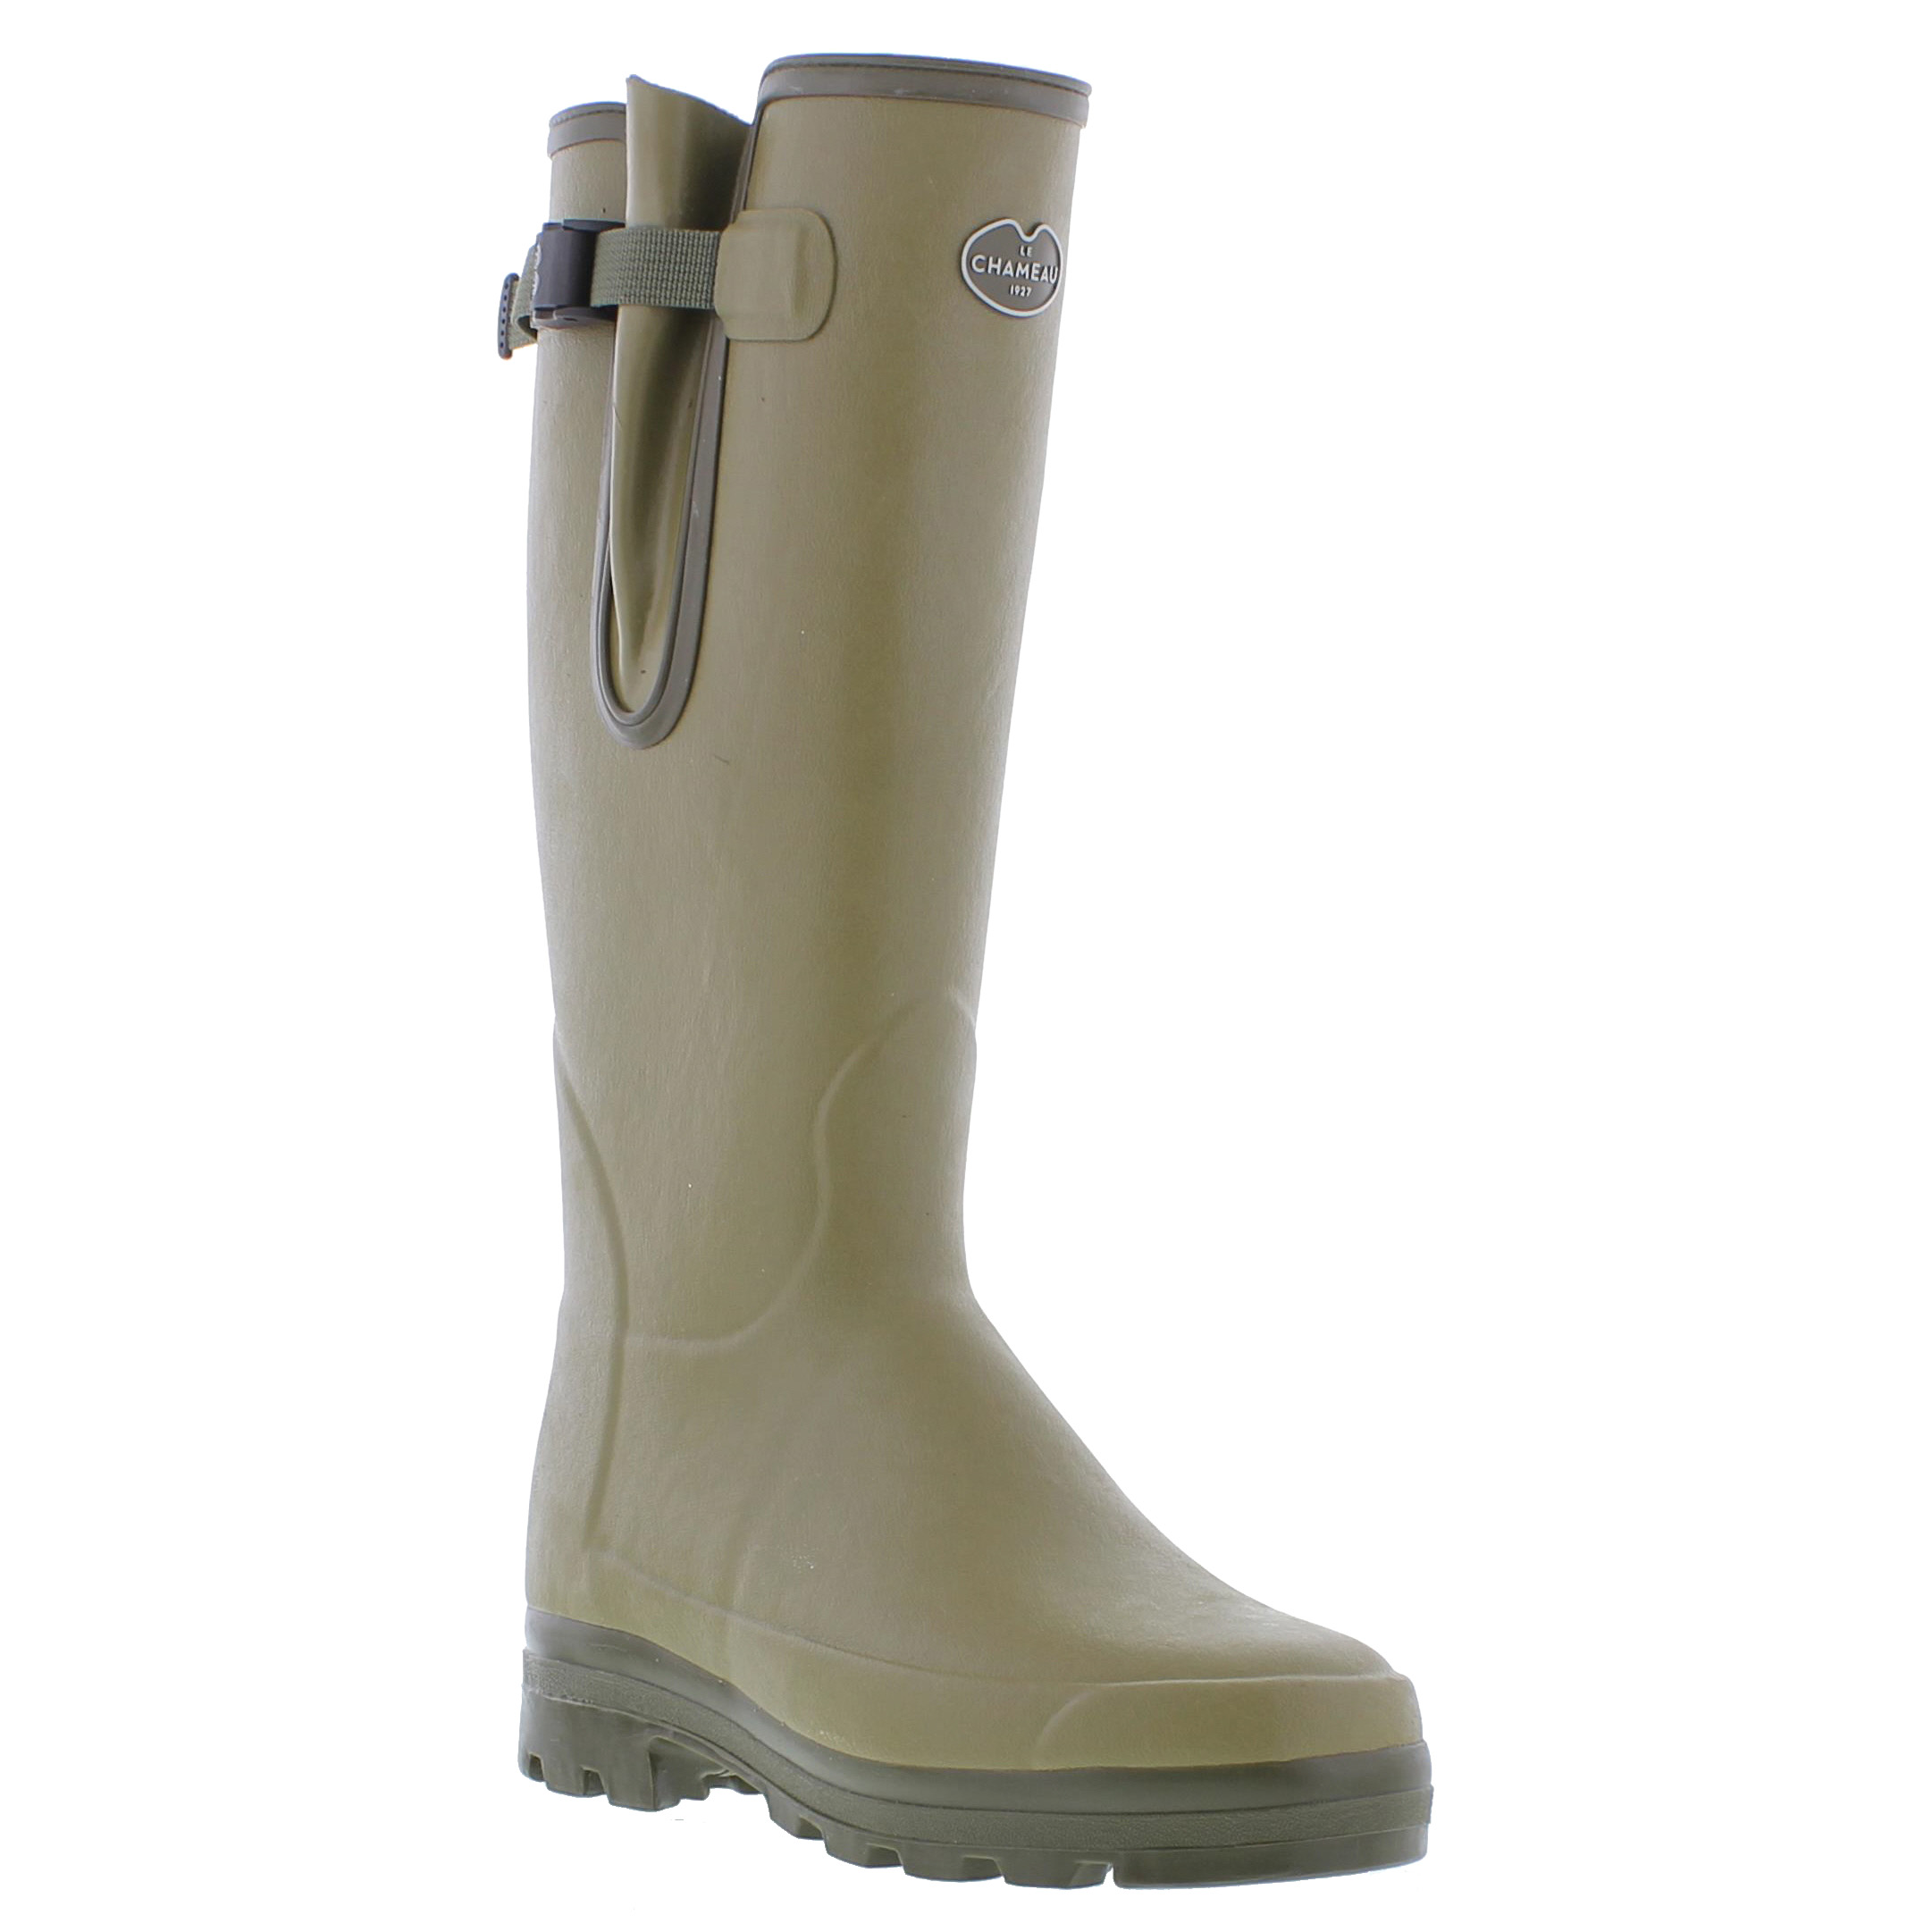 Le Chameau Mens Vierzonord Neoprene Lined Wellies Rain Boots - Vert 2951